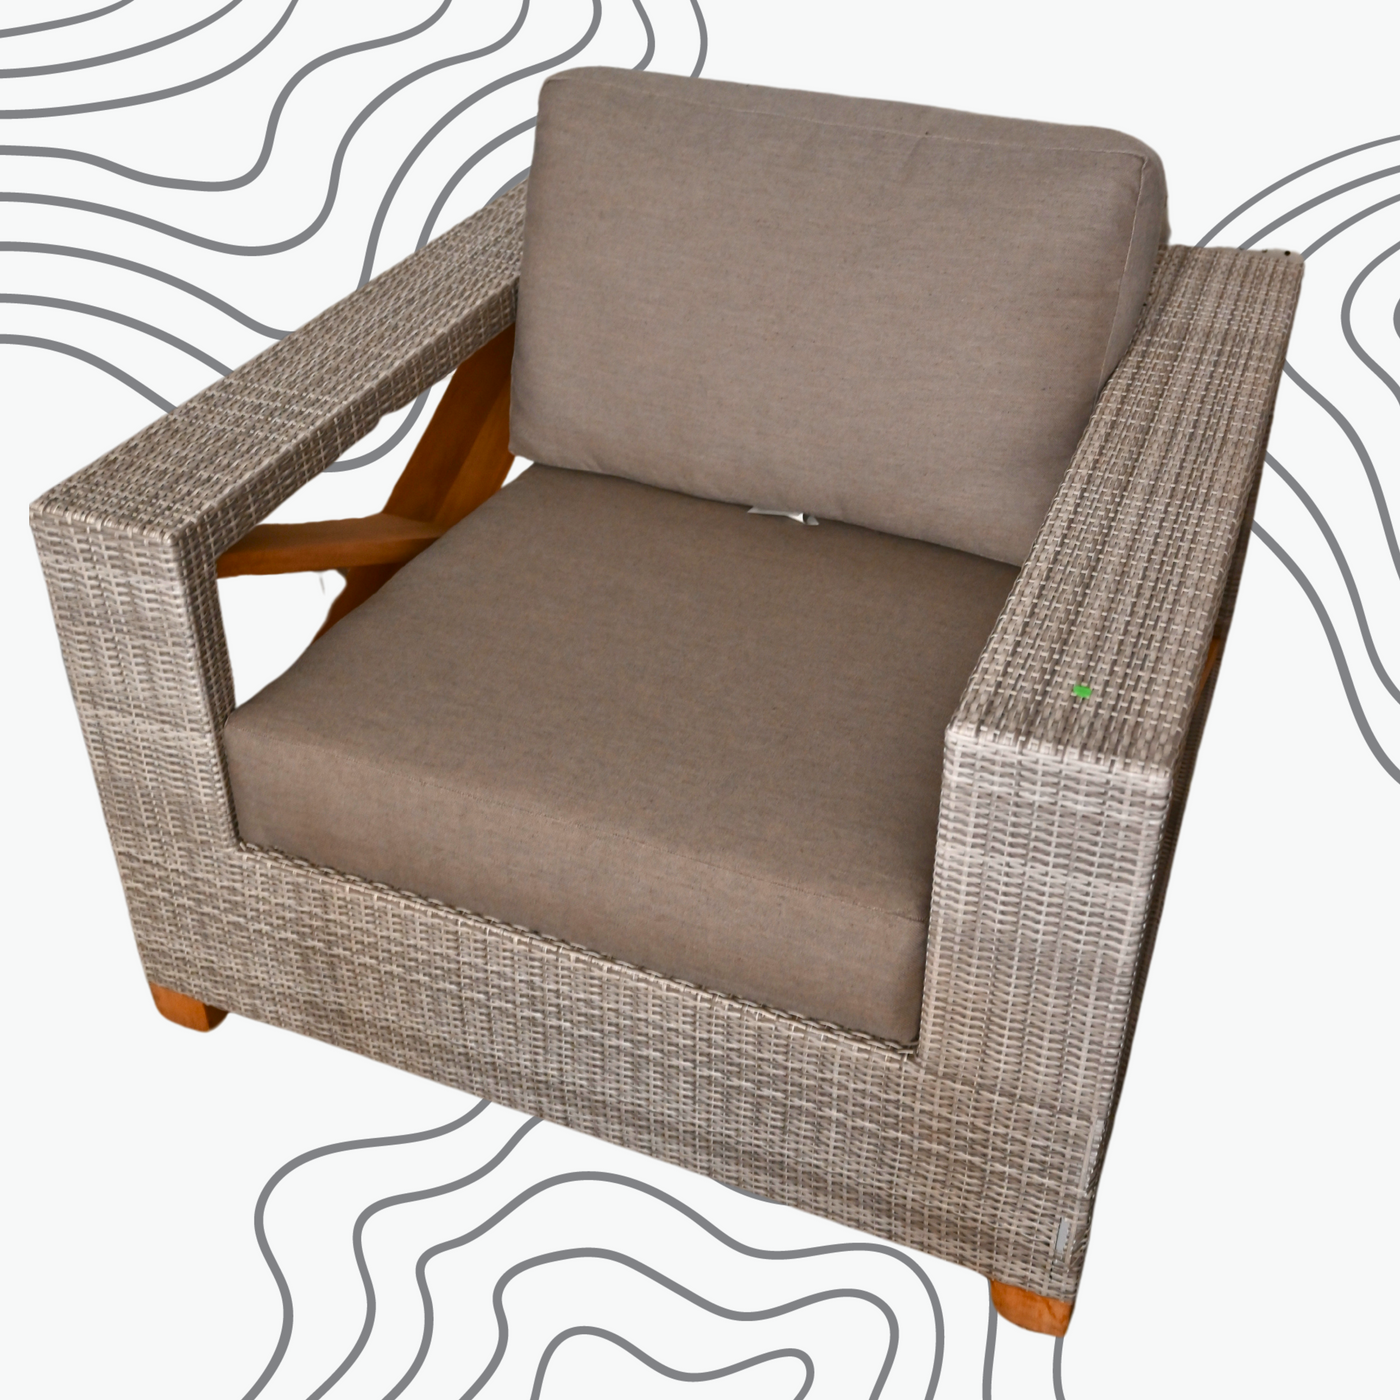 Kingsley Bate - Jupiter Chair